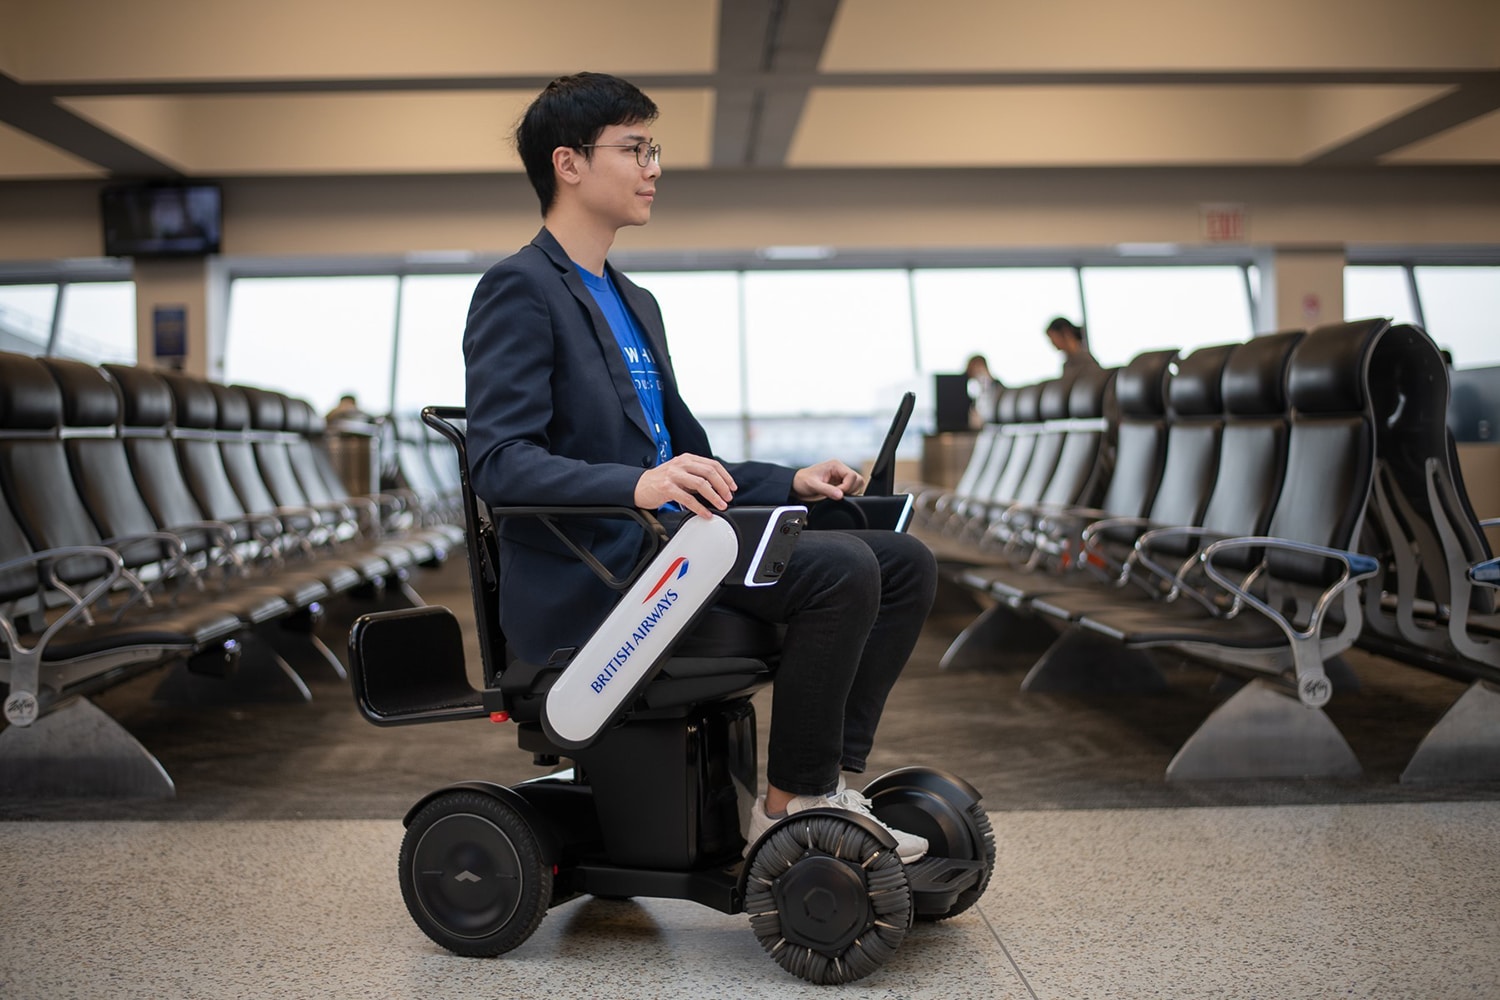 British Airways trials autonomous mobility device at New York JFK Airport.